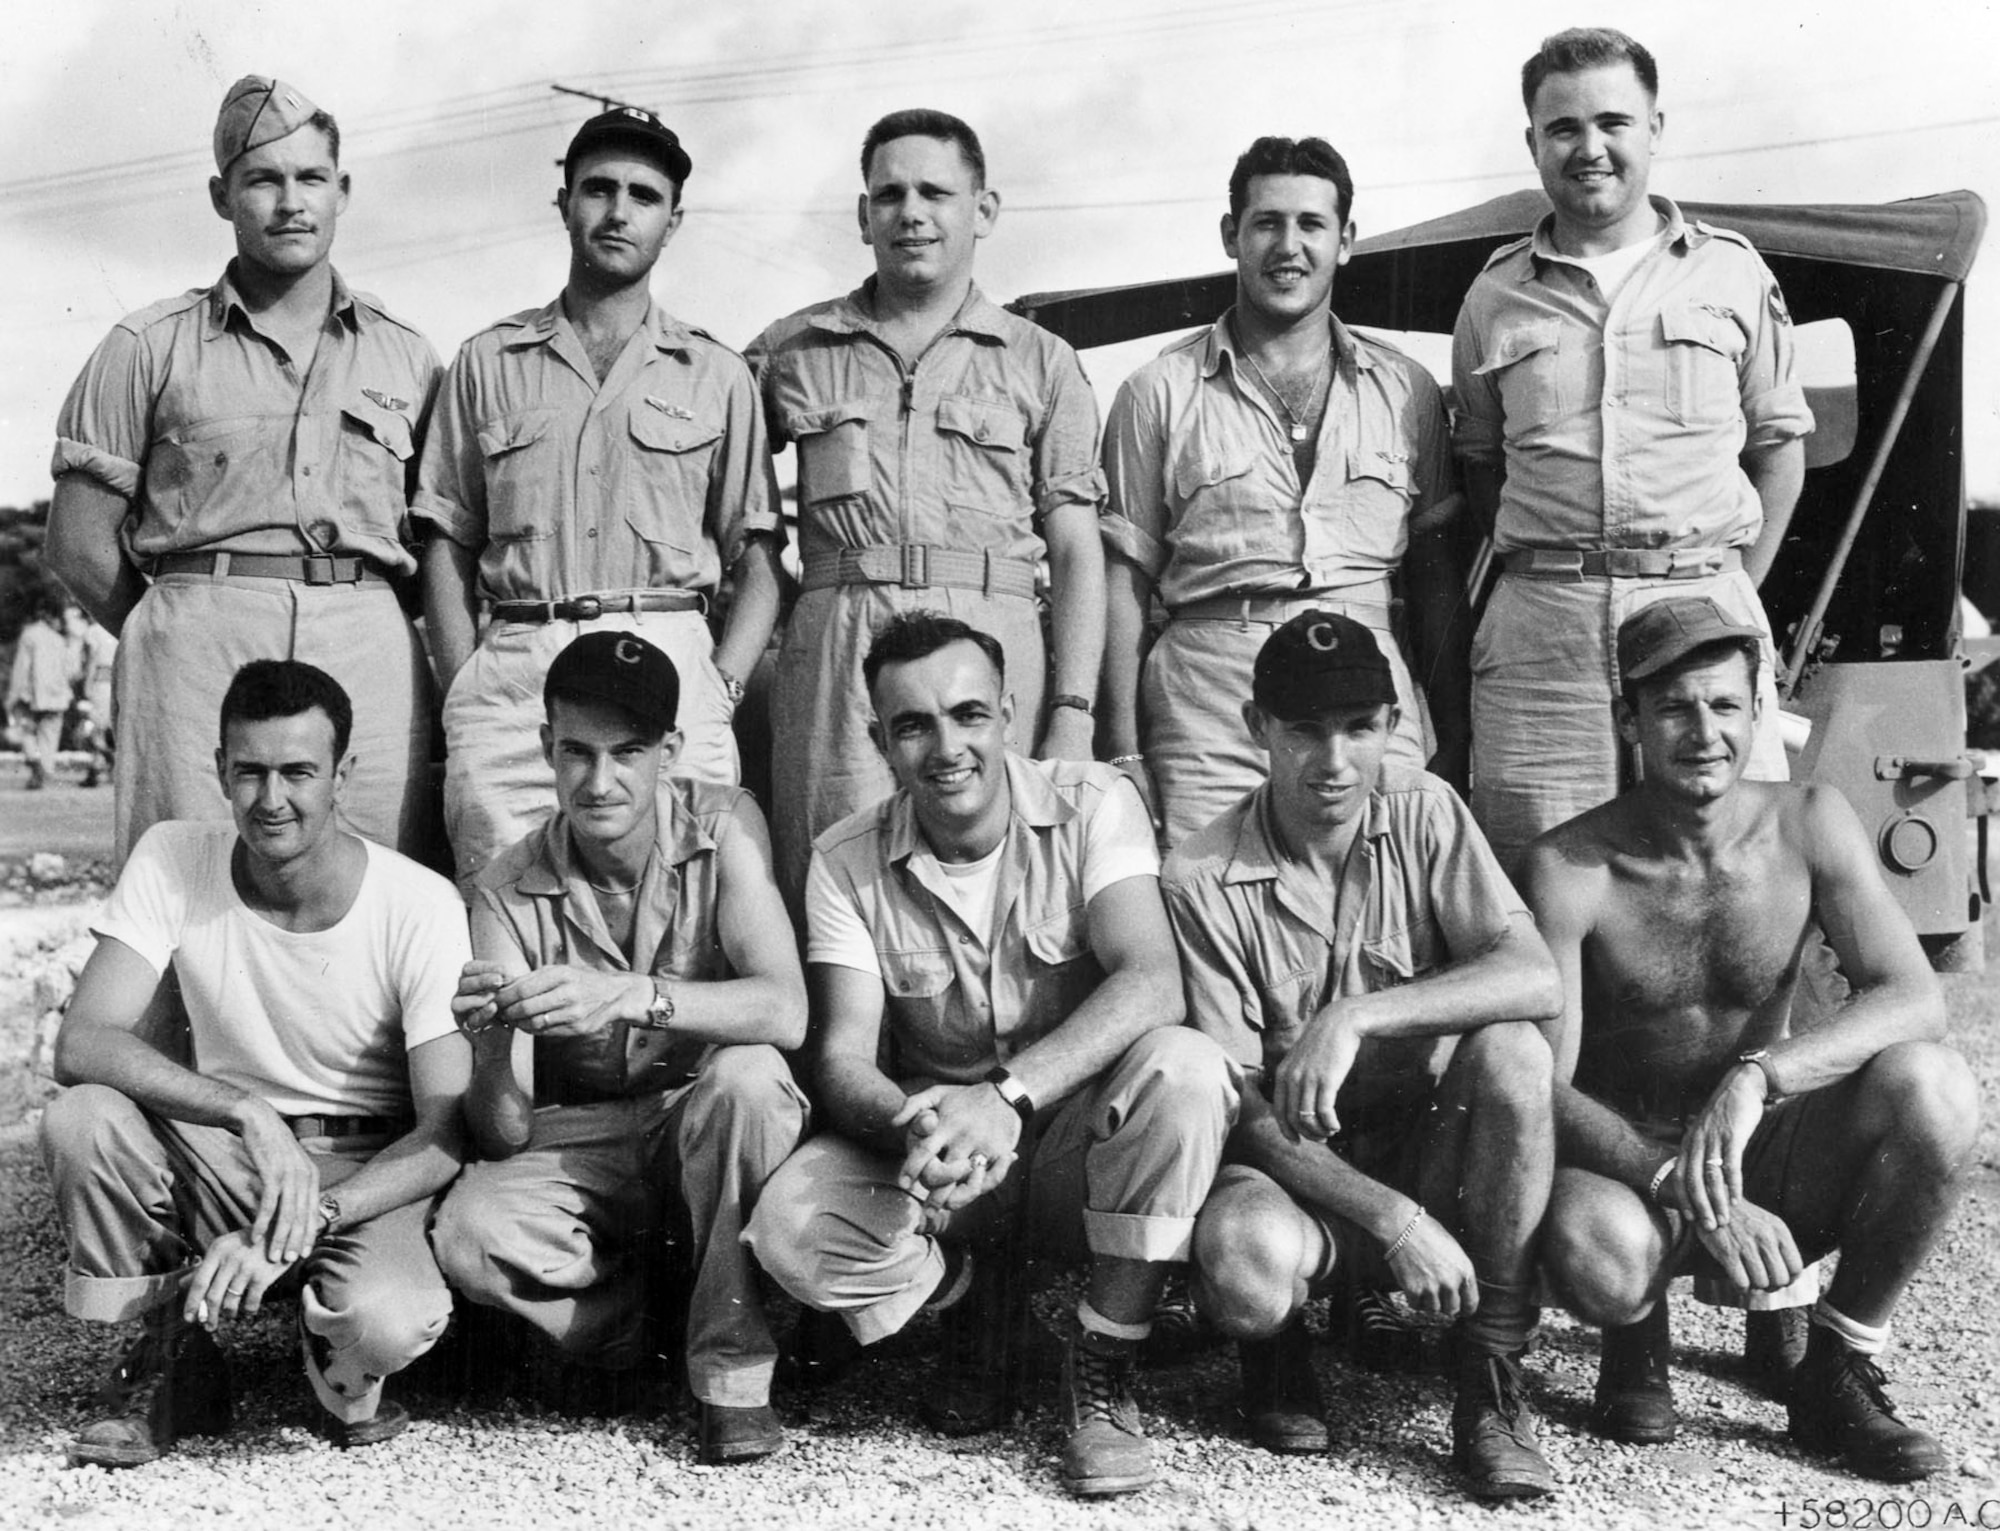 Back row (left to right): Capt. Kermit R. Beahan, Bombardier; Capt. James F. Van Pelt, Navigator; Capt. Charles D. Albury, Pilot; 2nd Lt. Fred J. Olivi, Co-pilot; Maj. Charles W. Sweeney, Aircraft Commander. Front row (left to right): SSgt. Edward K. Buckley, Radar Operator; MSgt. John D. Kuharek, Flight Engineer; Sgt. Raymond G. Gallagher, Assistant Flight Engineer; SSgt. Albert T. Dehart, Tail Gunner; Sgt. Abe M. Spitzer, Radio Operator. (U.S. Air Force photo)